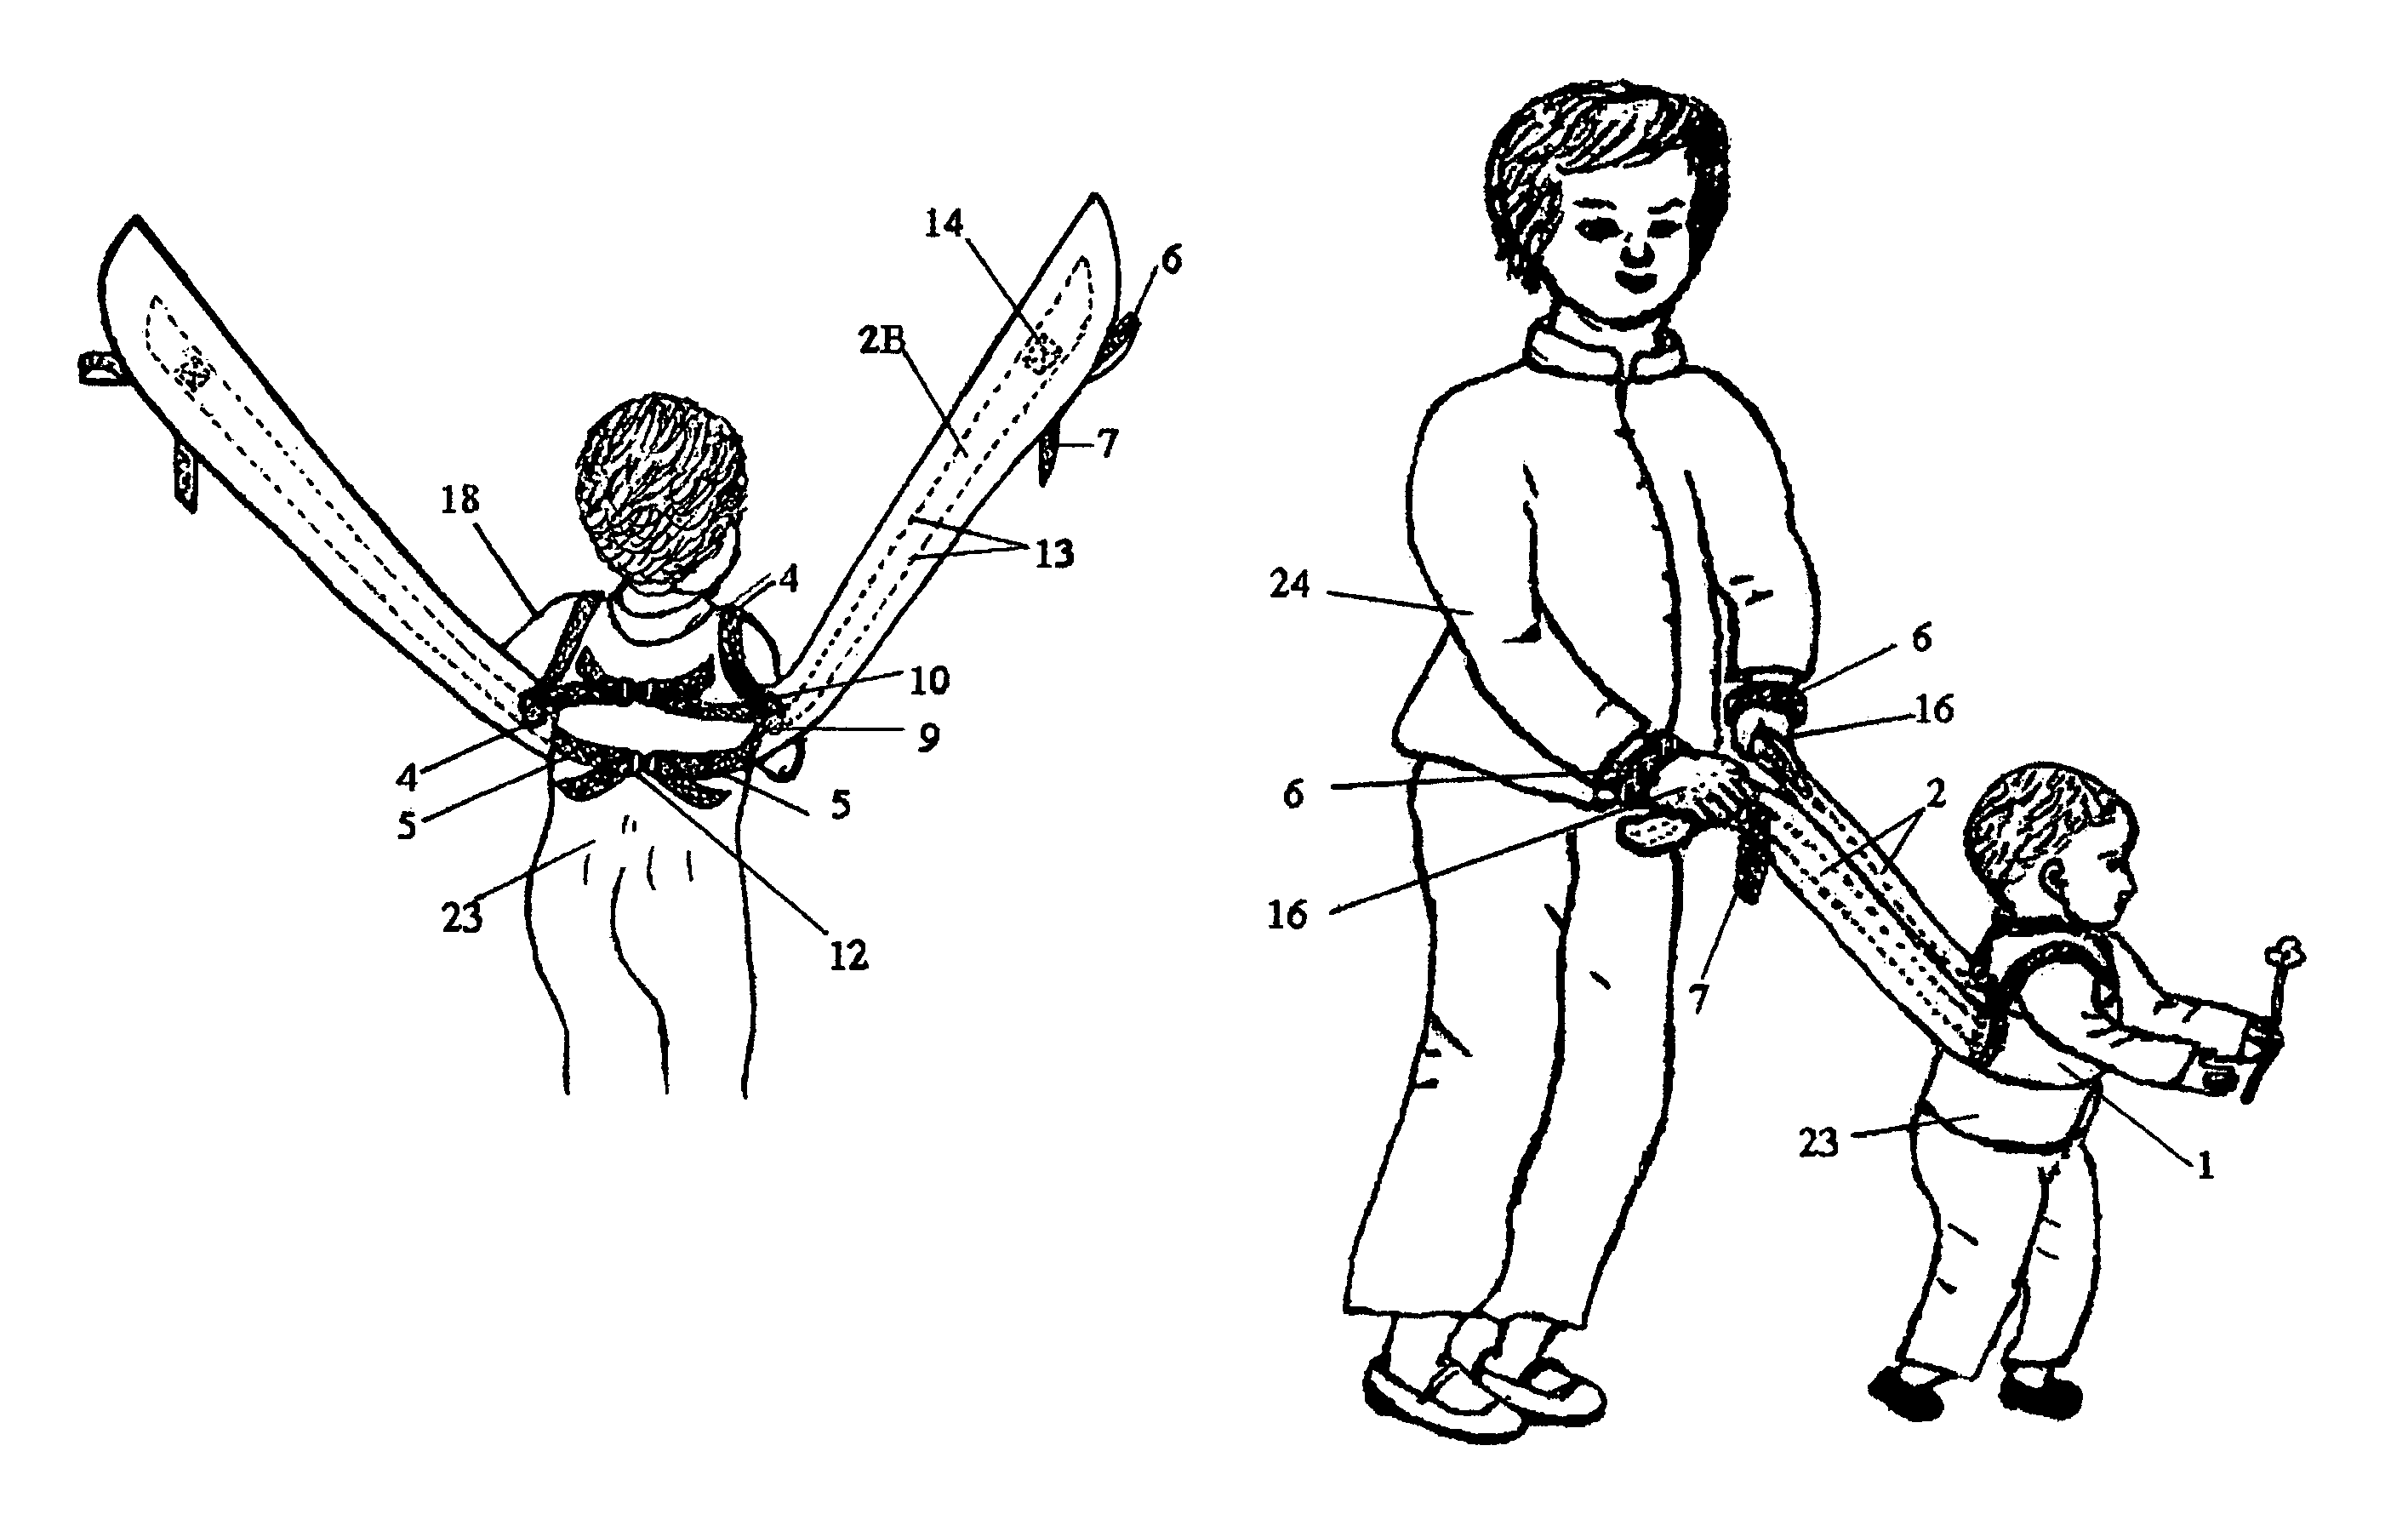 Baby walker/walking safety belt apparatus